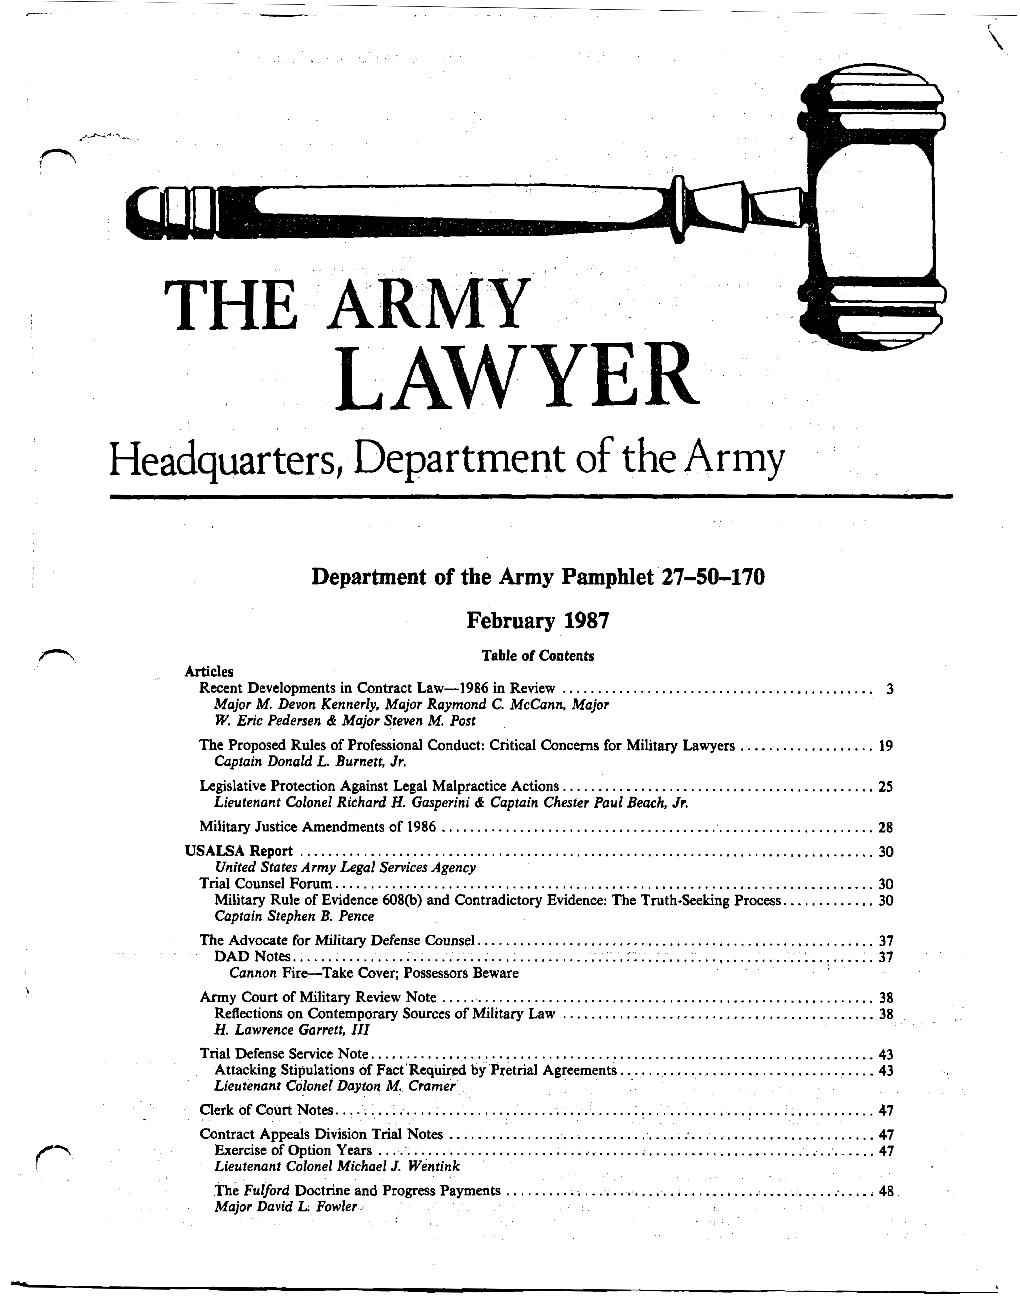 The Army Lawyer (Feb